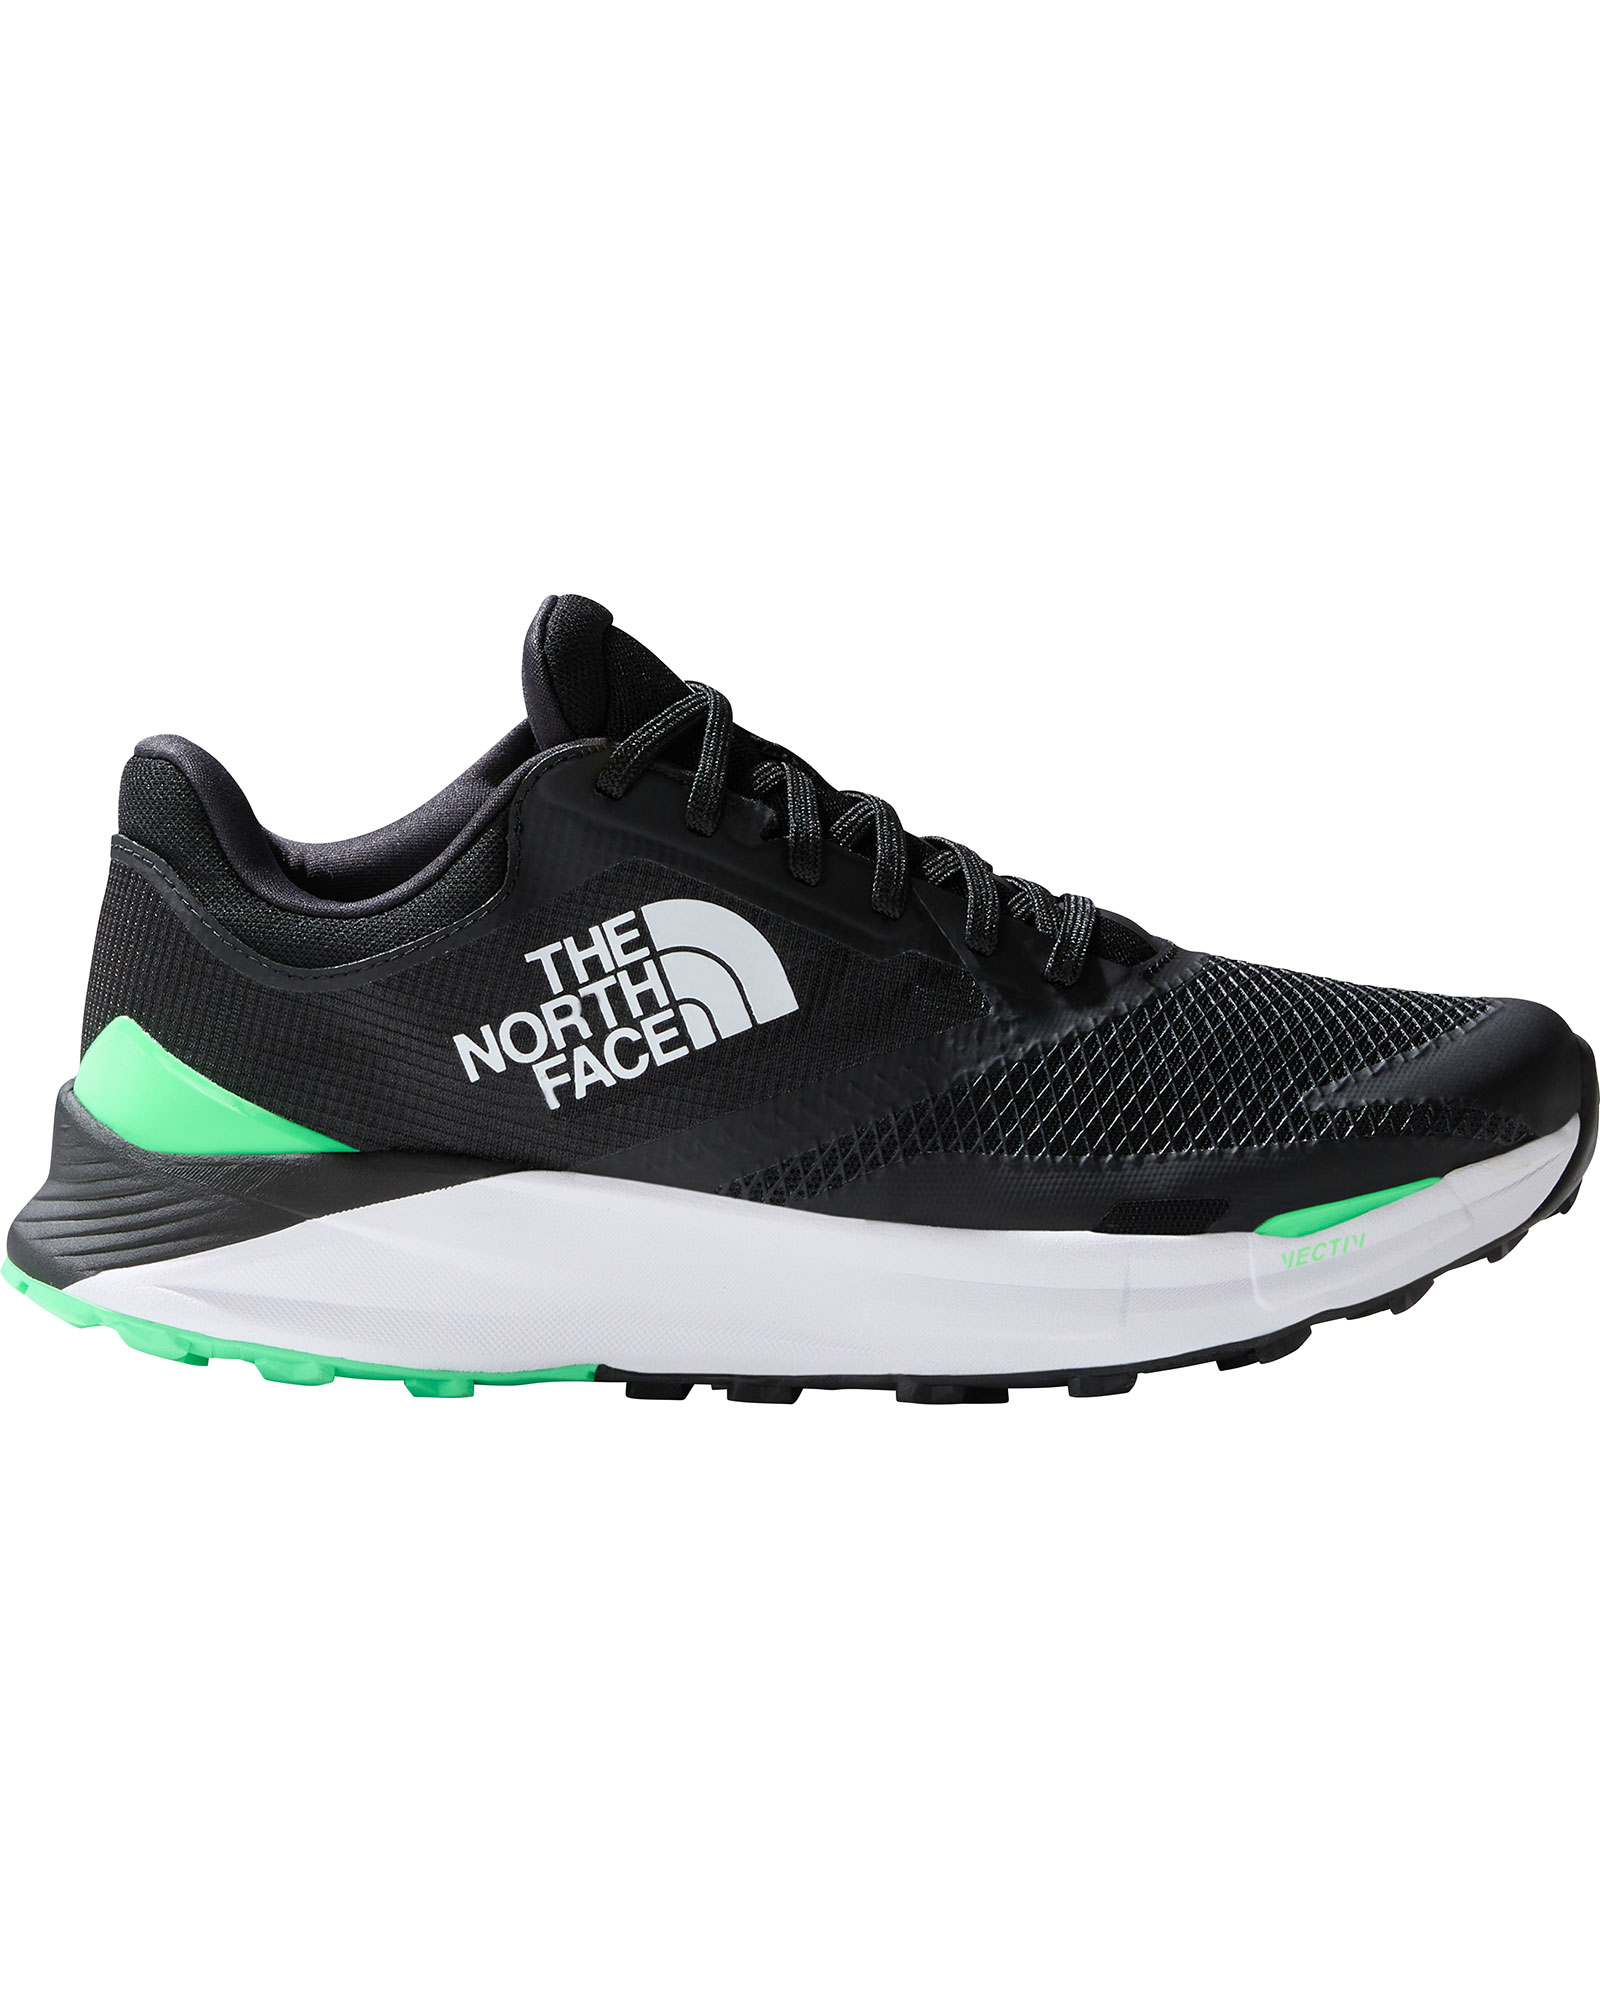 The North Face Vectiv Enduris 3 Men’s Trail Shoes - TNF Black/Chlorophyll Green UK 12